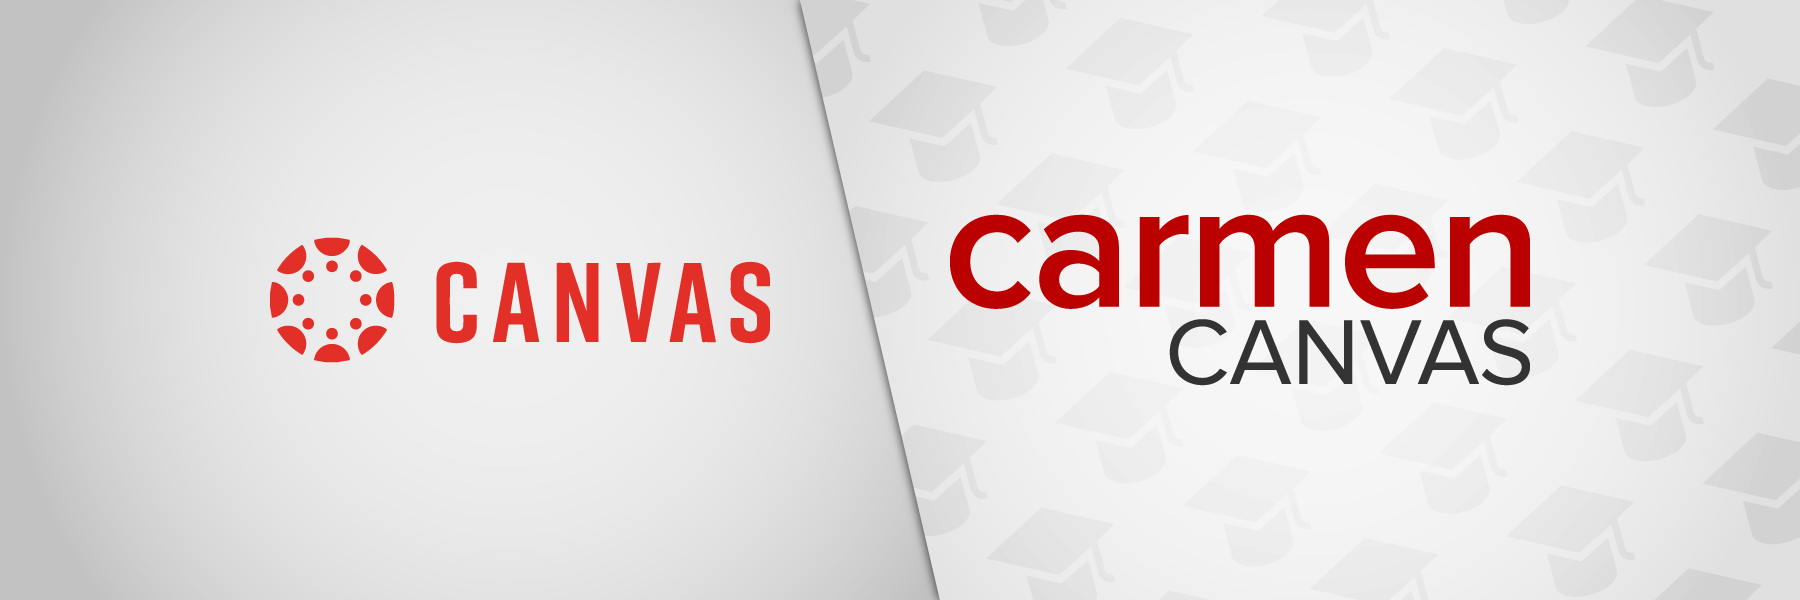 https://carmen.osu.edu/components/widgets/slip/welcome/CarmenCanvas-service-catalog-primary-image-banner-1800x600.png